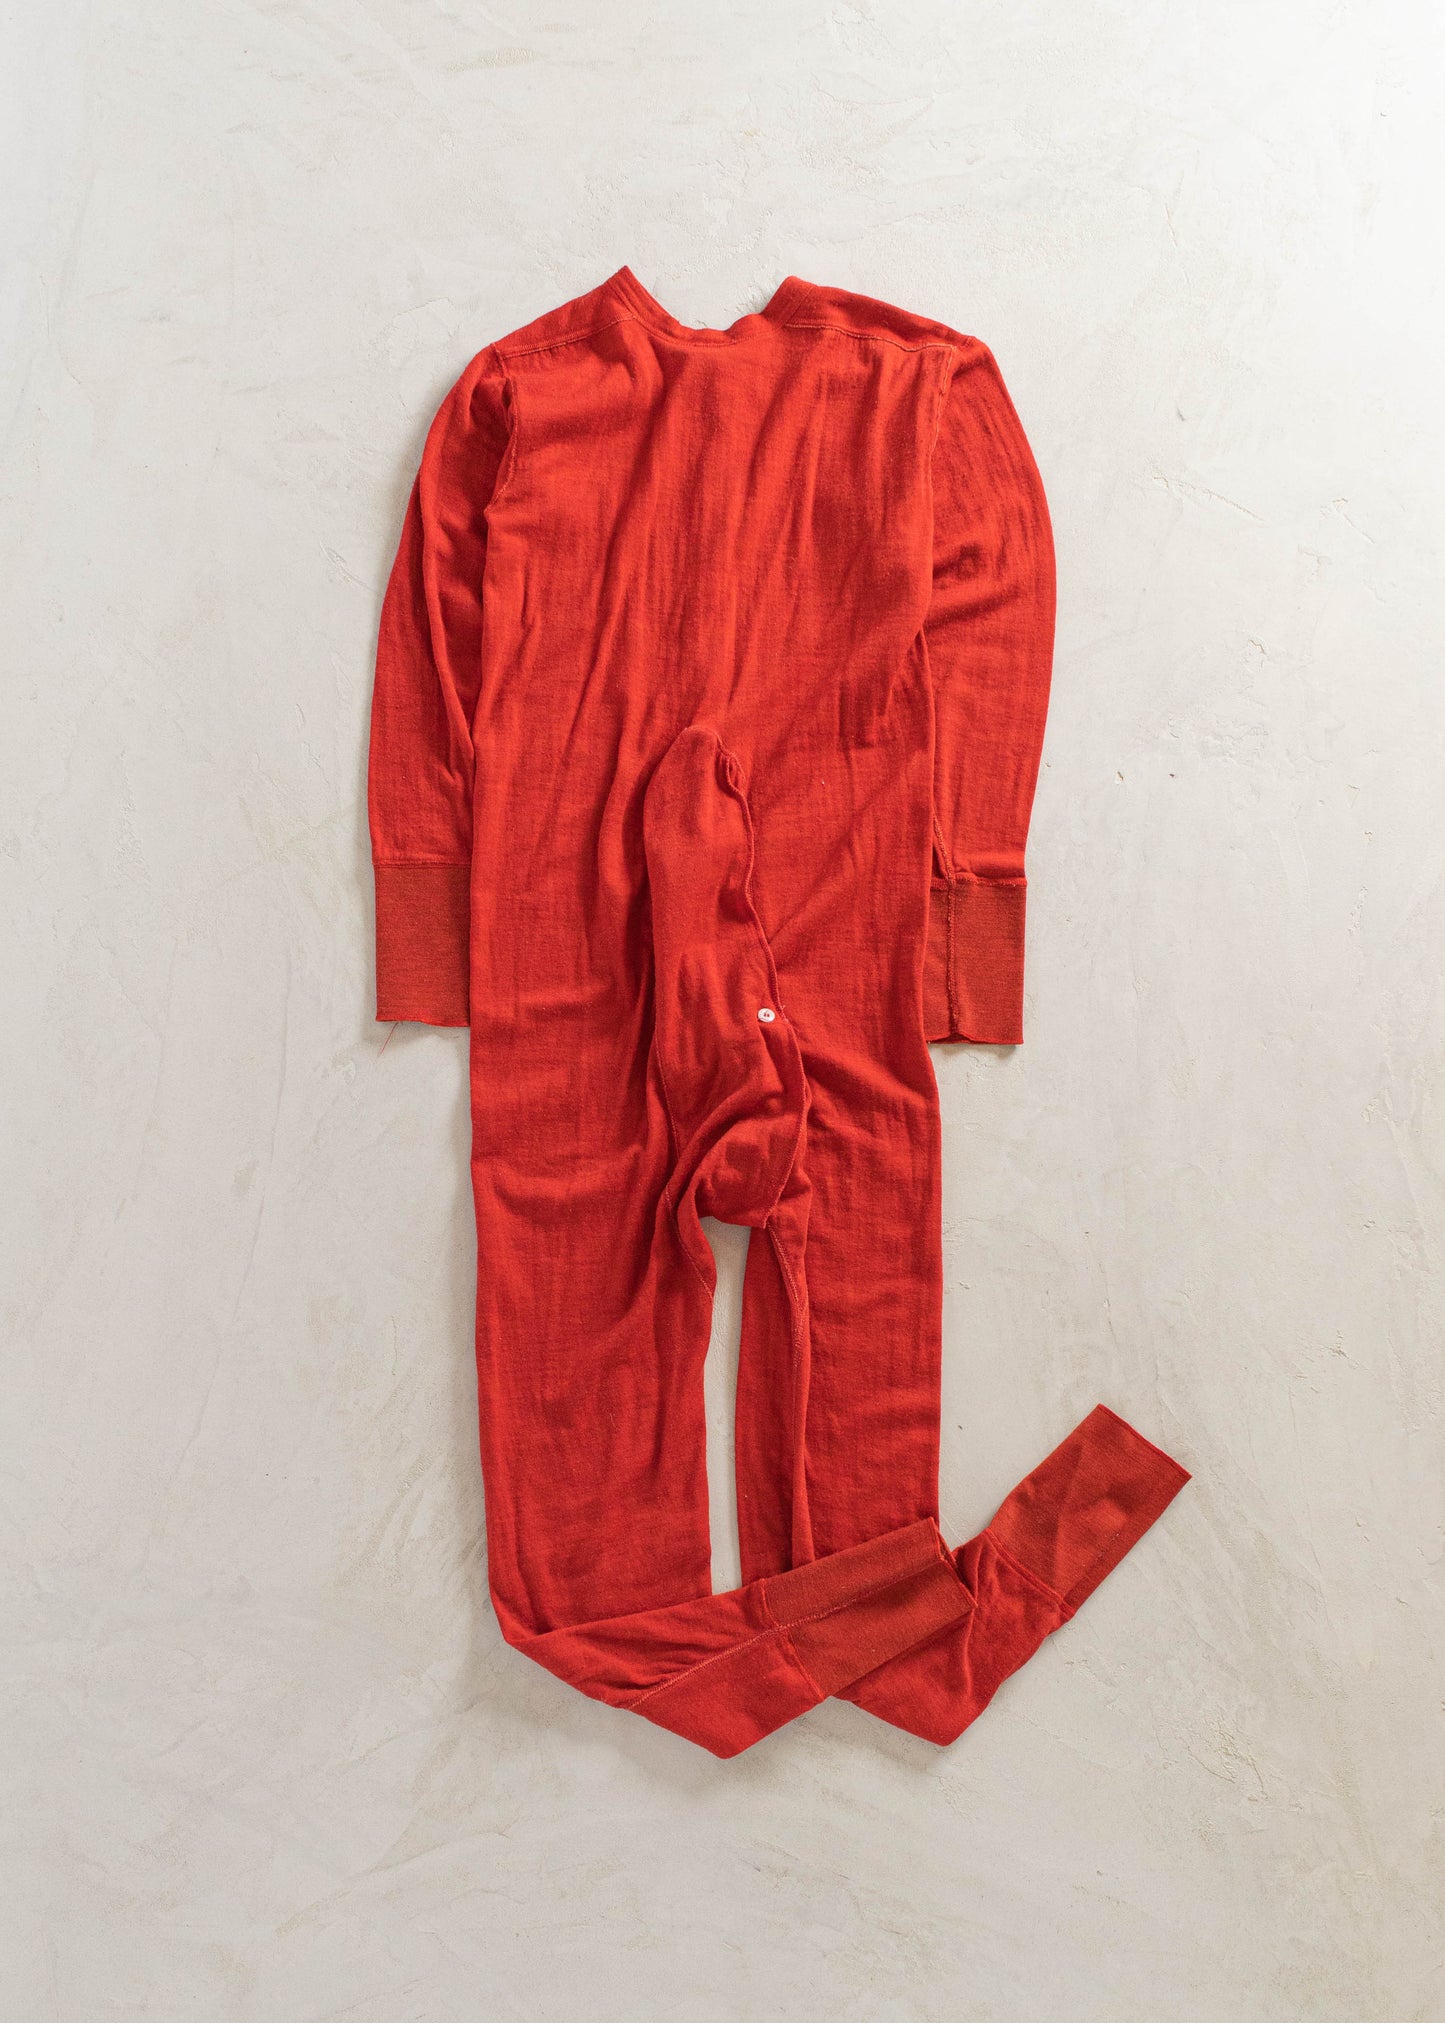 1980s Wool Blend Union Suit Onesie Pajamas Size 2XS/XS